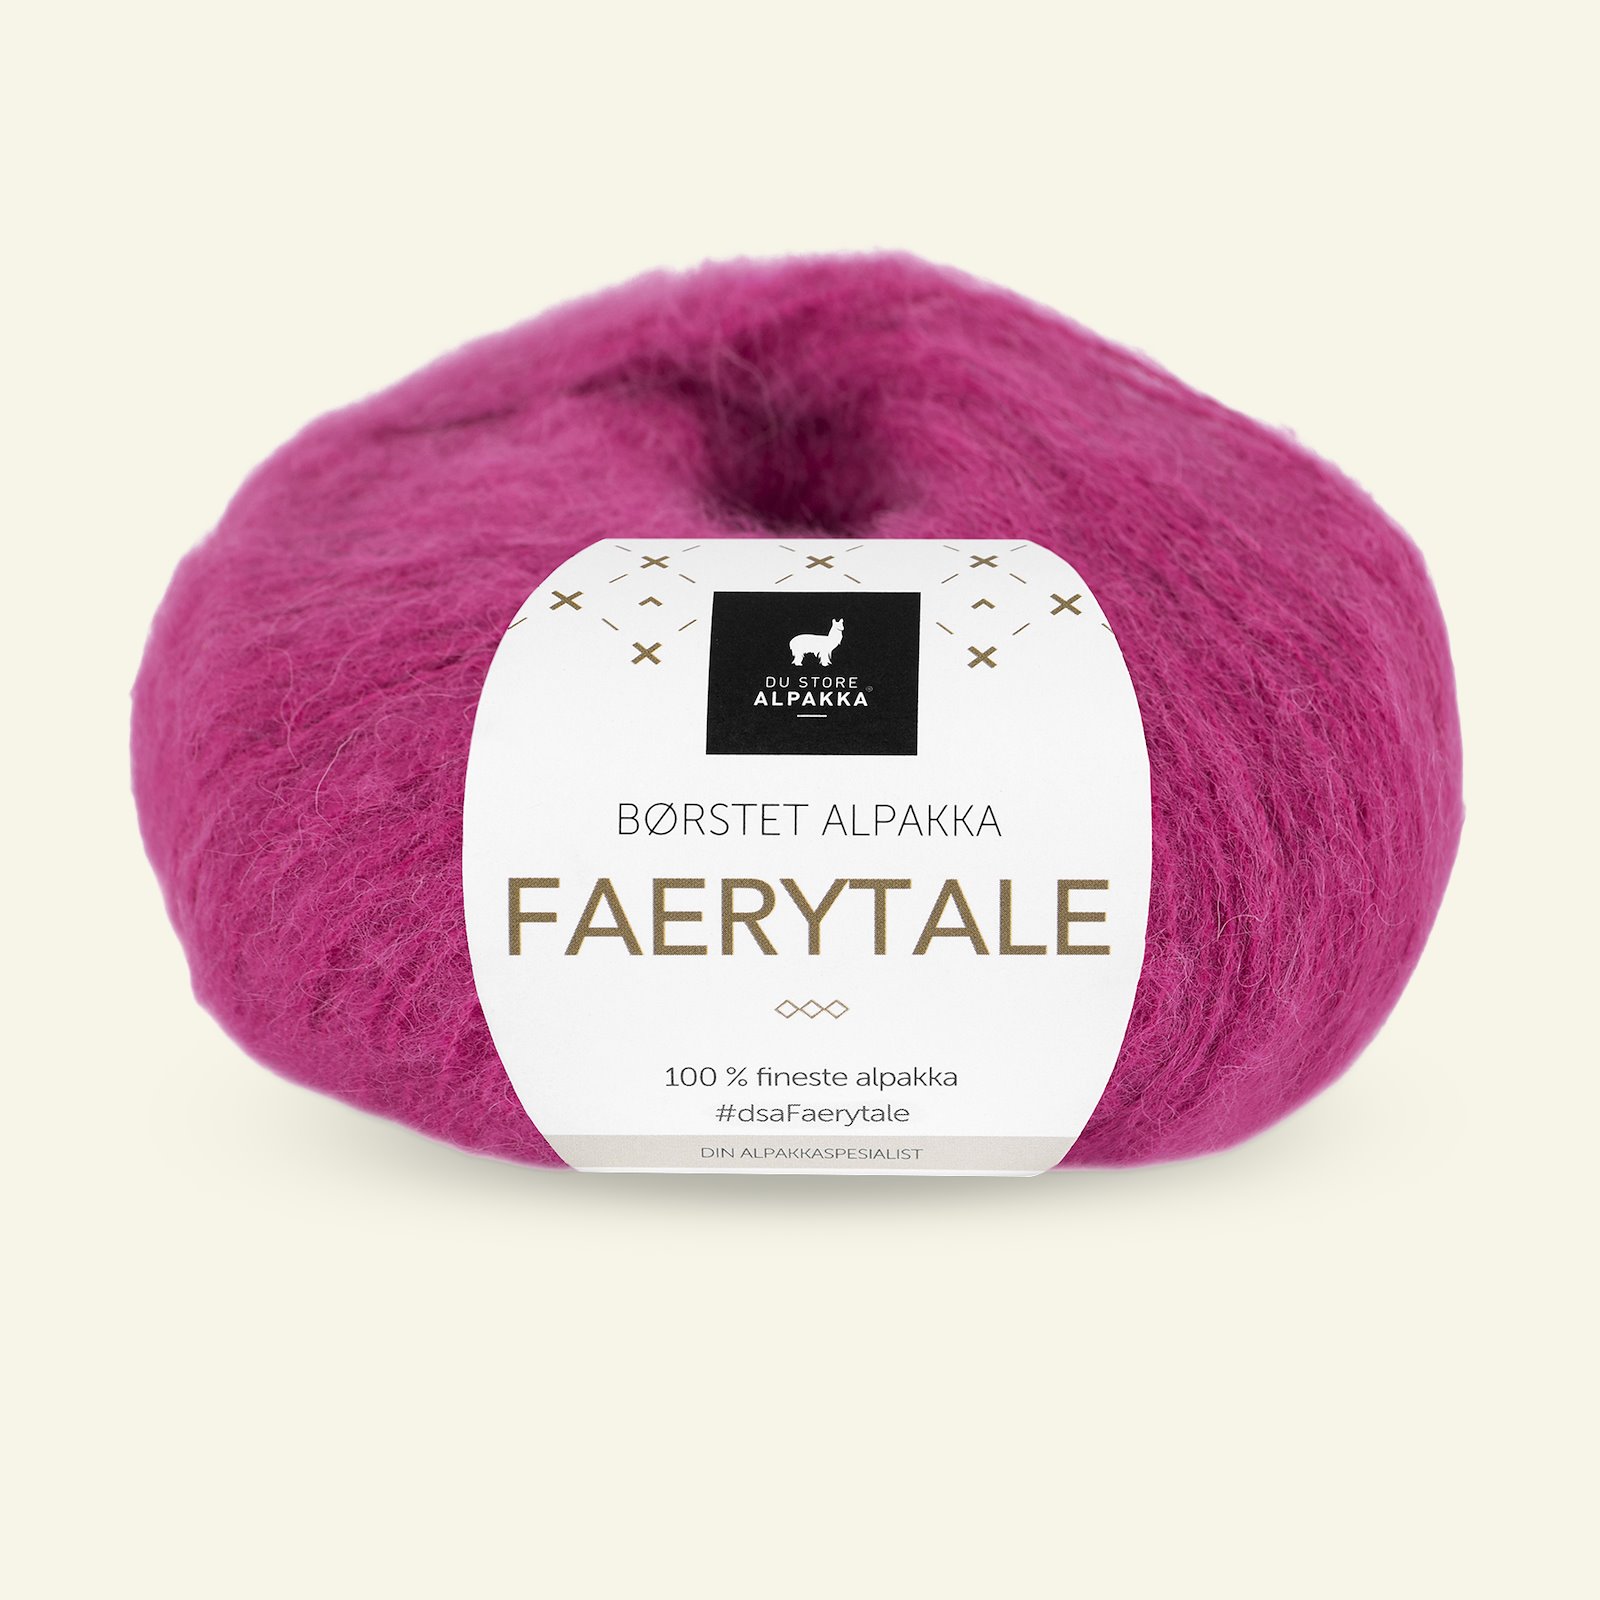 Du Store Alpakka, børsted alpakkagarn "Faerytale", pink (813) 90000620_pack_b